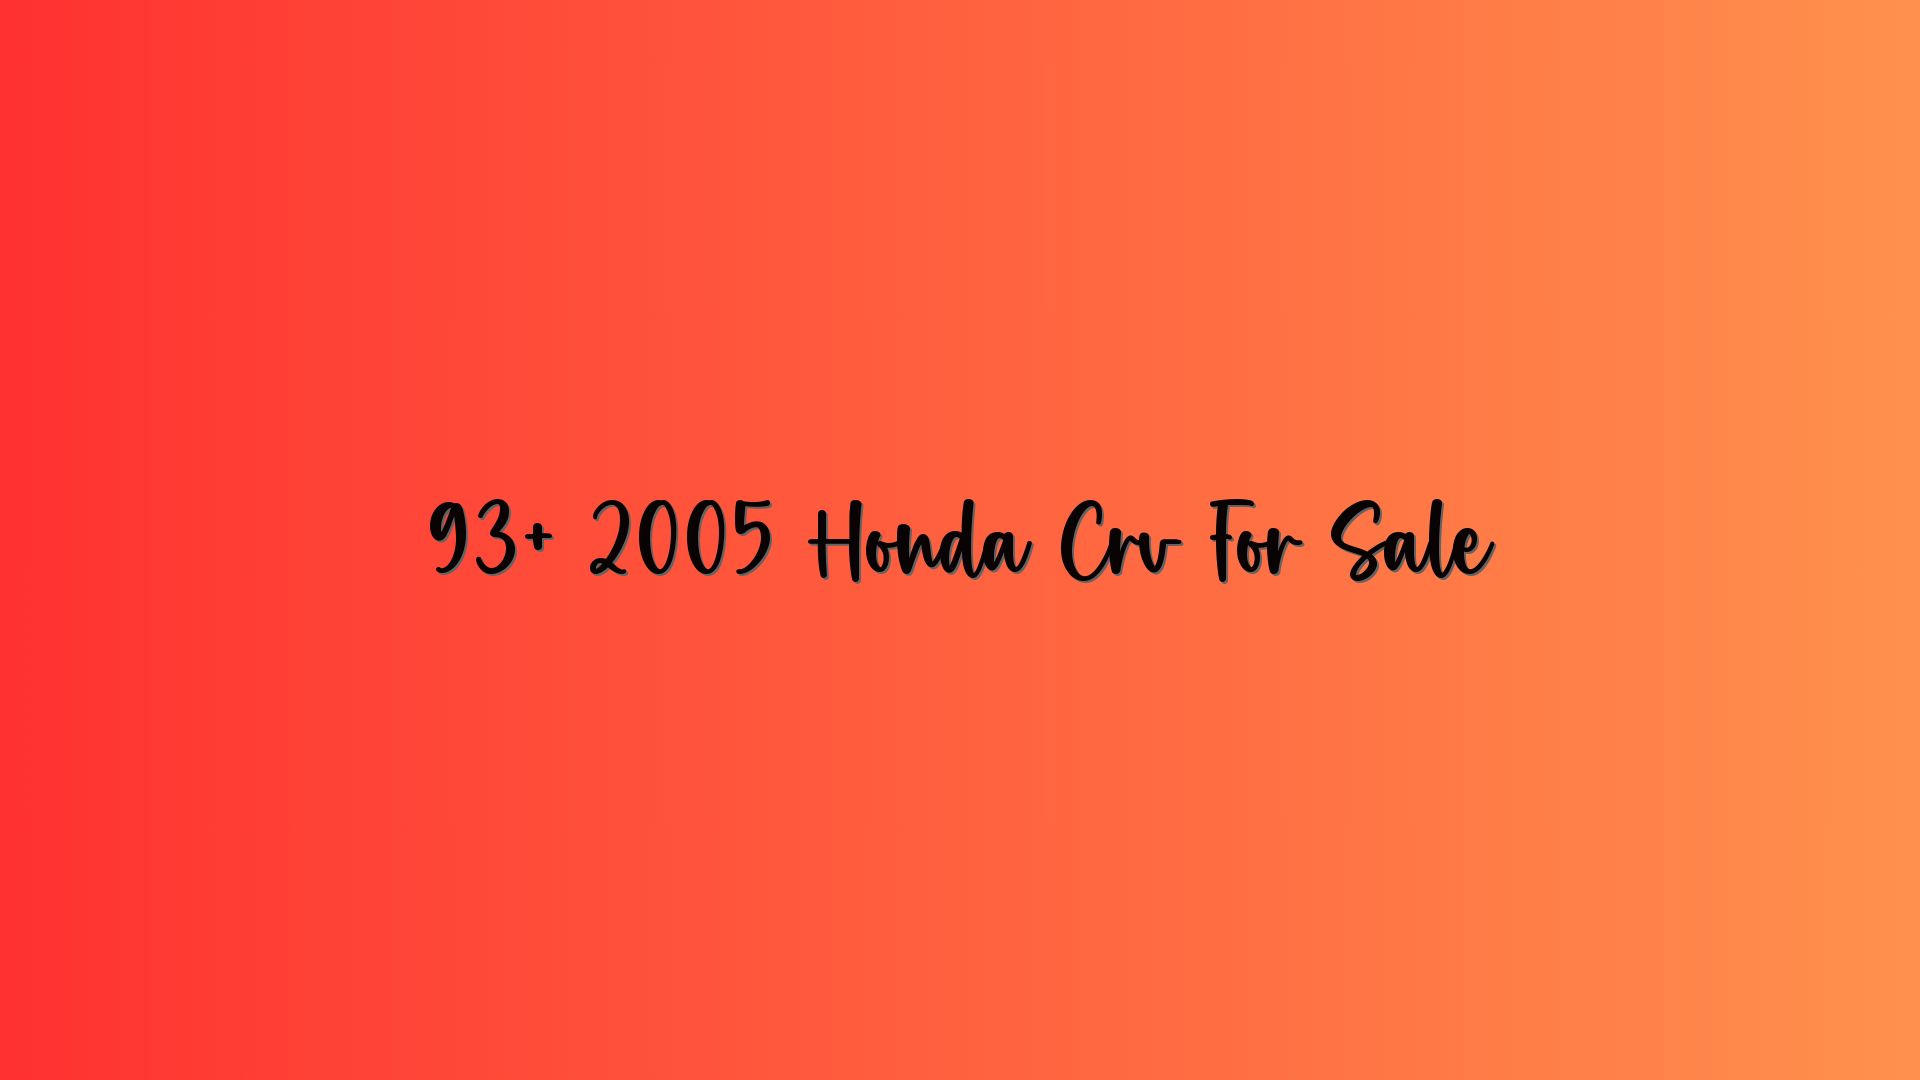 93+ 2005 Honda Crv For Sale